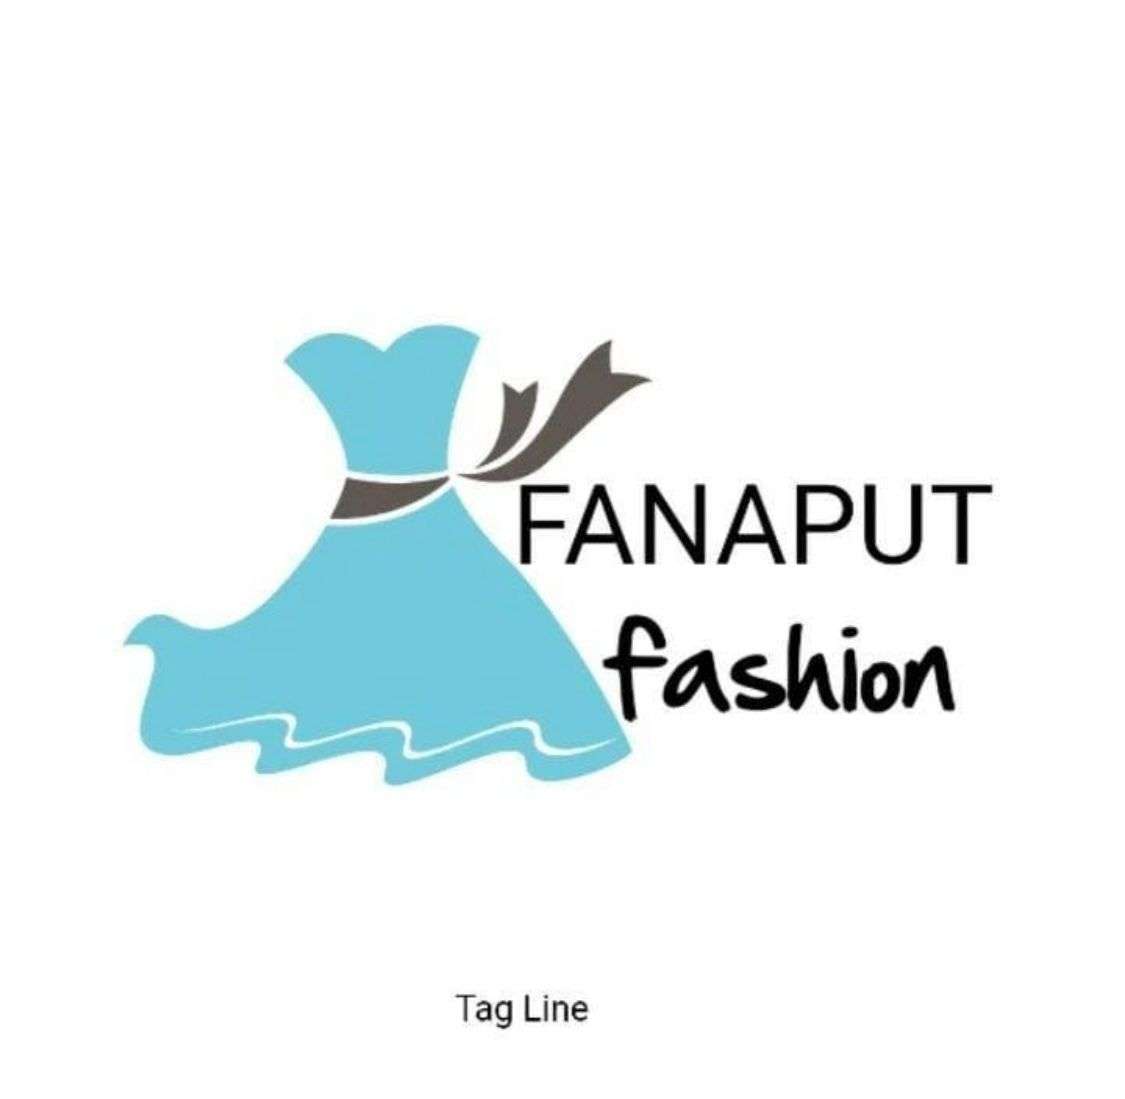 Fanaput fashion